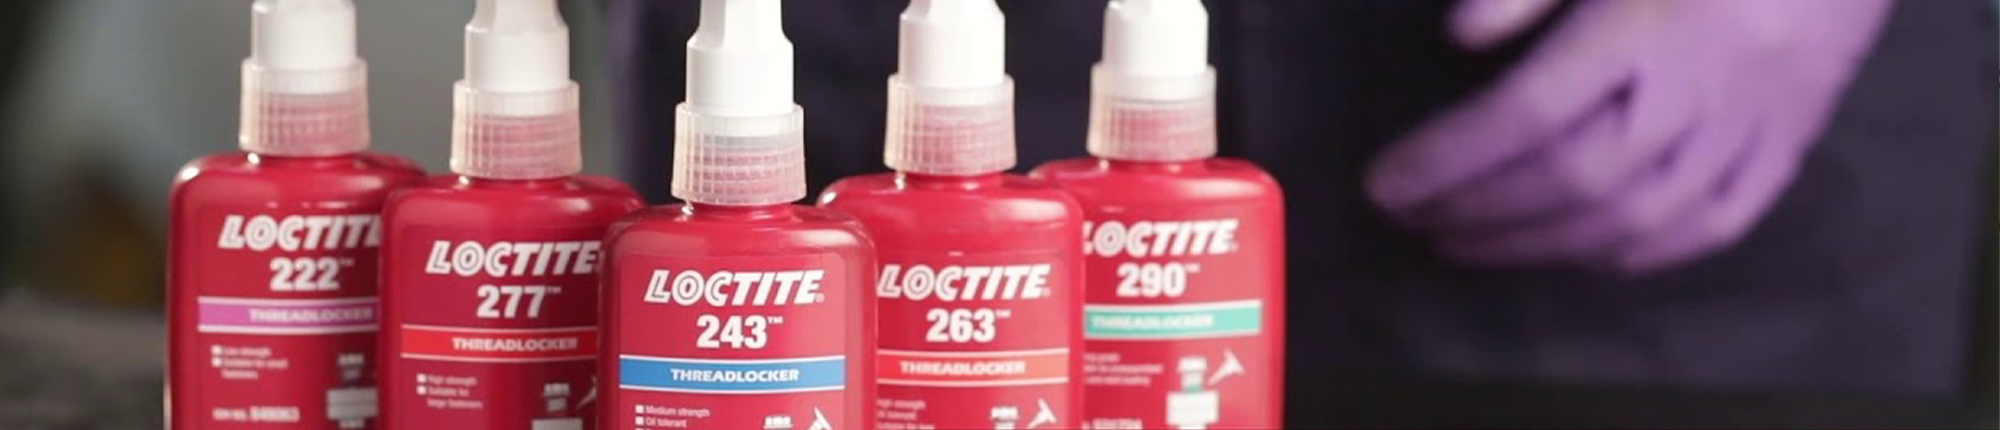 Various Loctite bottles